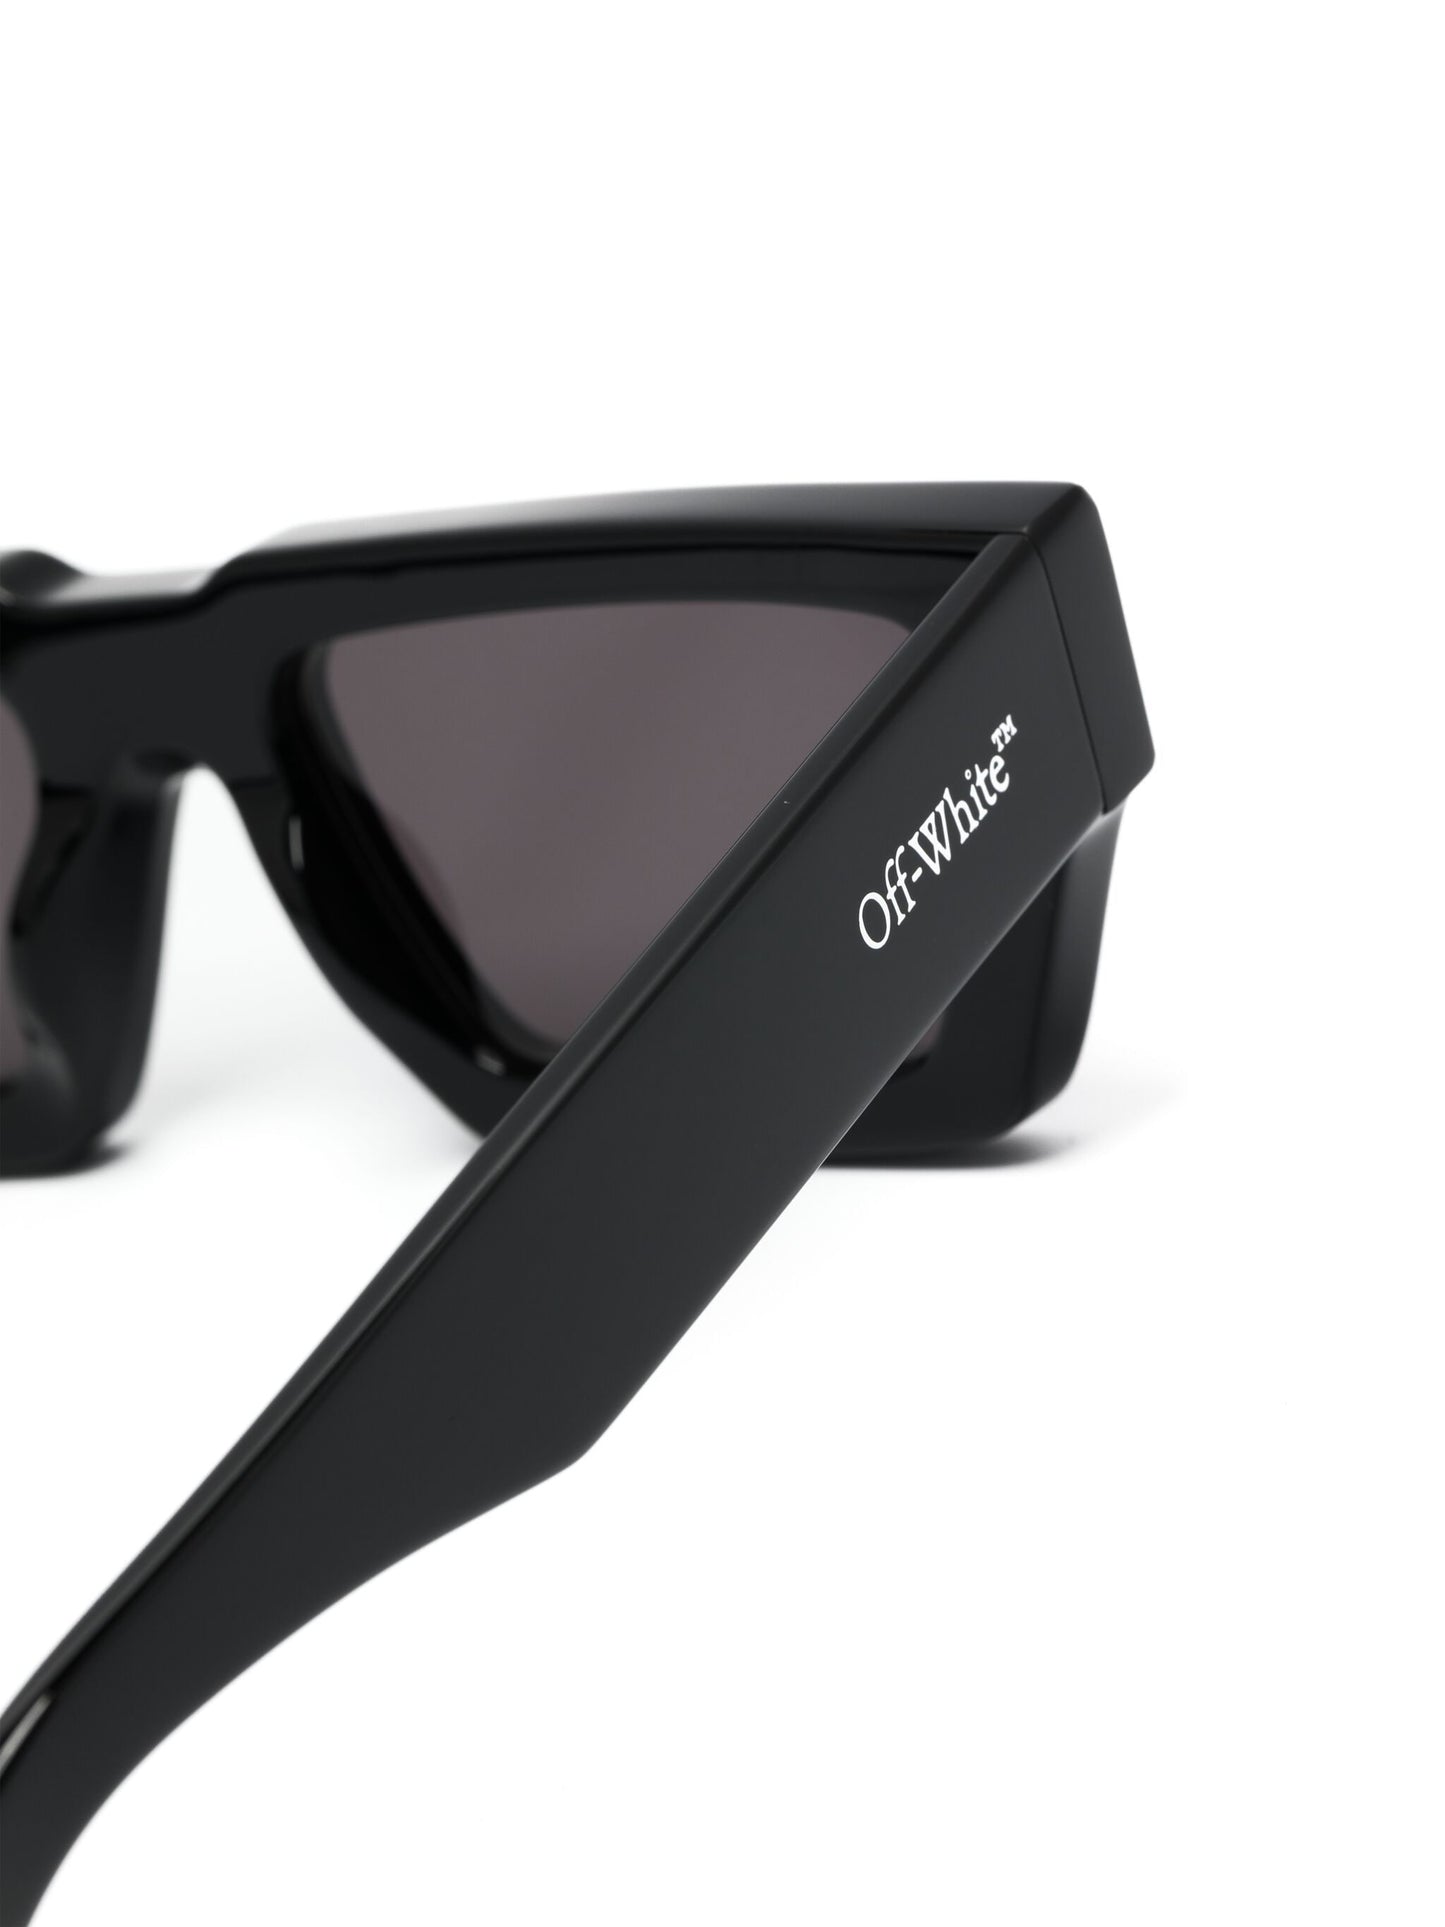 Off-White OERI129S24PLA0011007 54mm New Sunglasses